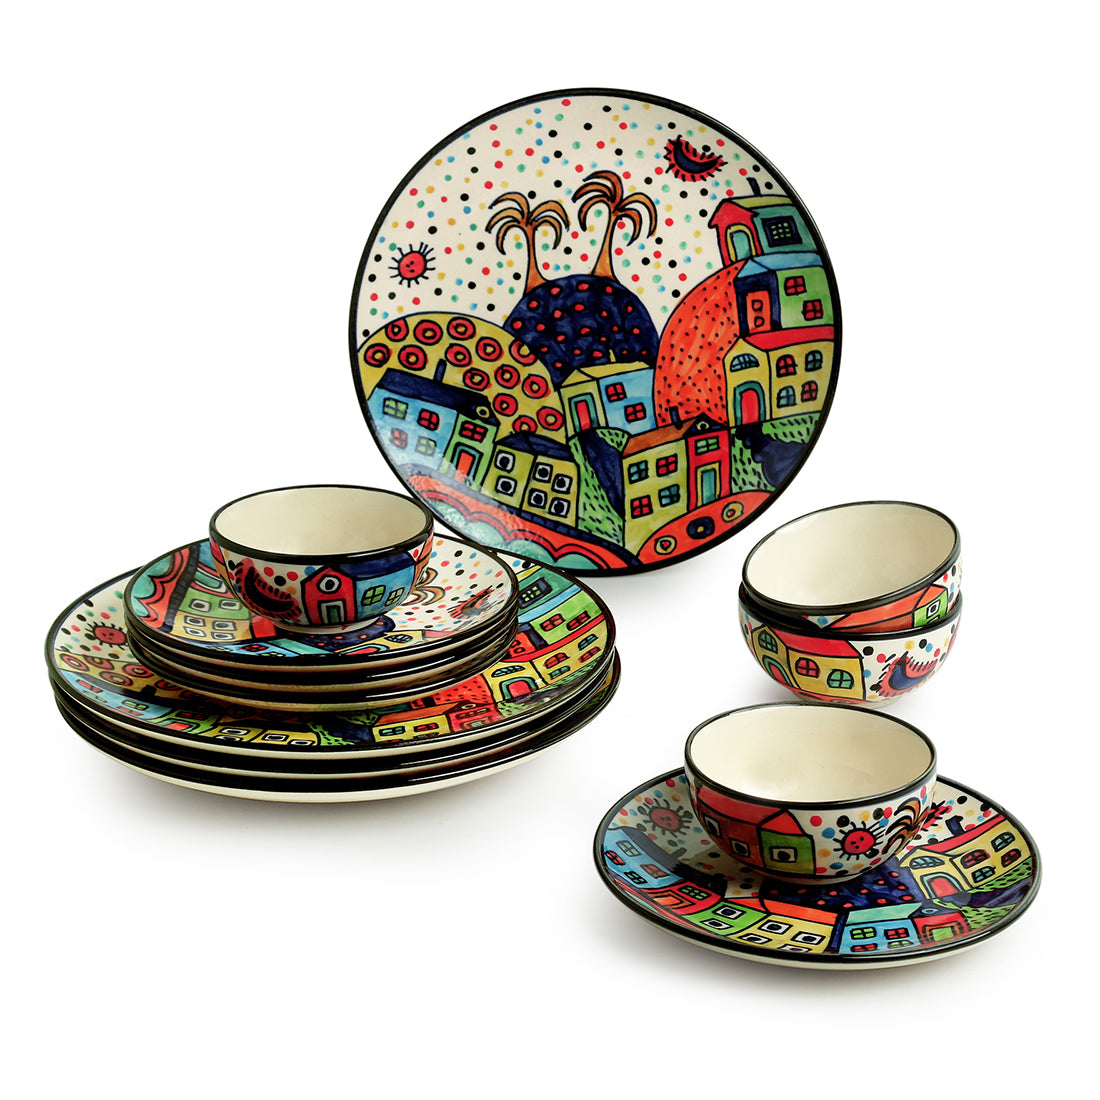 'Hut Dining' Handpainted Ceramic Dinner & Quarter Plates With Katoris (12 Pieces, Serving for 4)